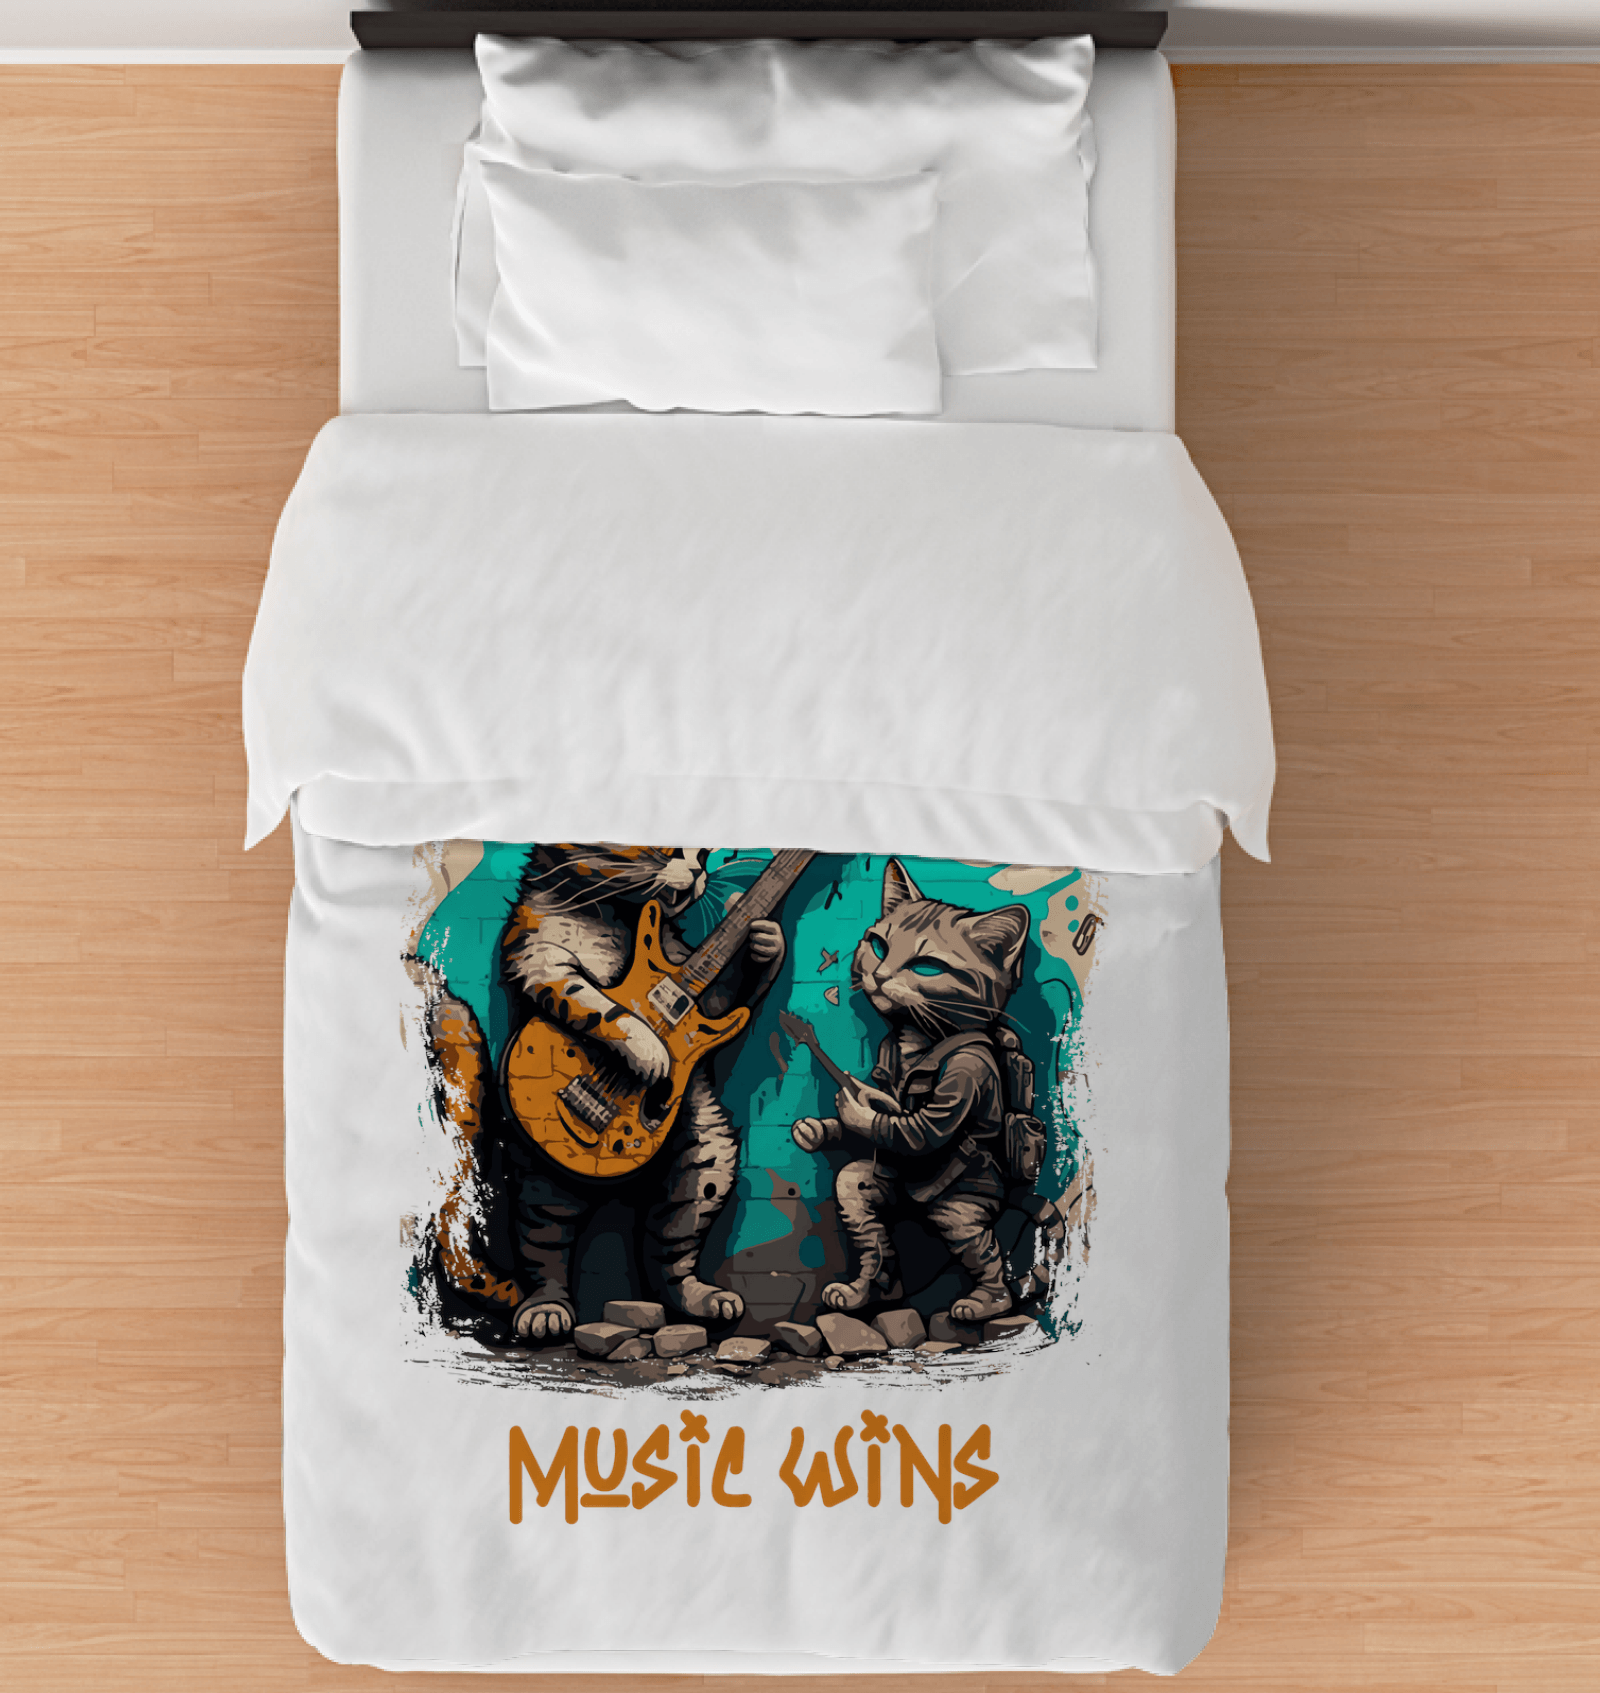 Music Wins Comforter - Twin - Beyond T-shirts